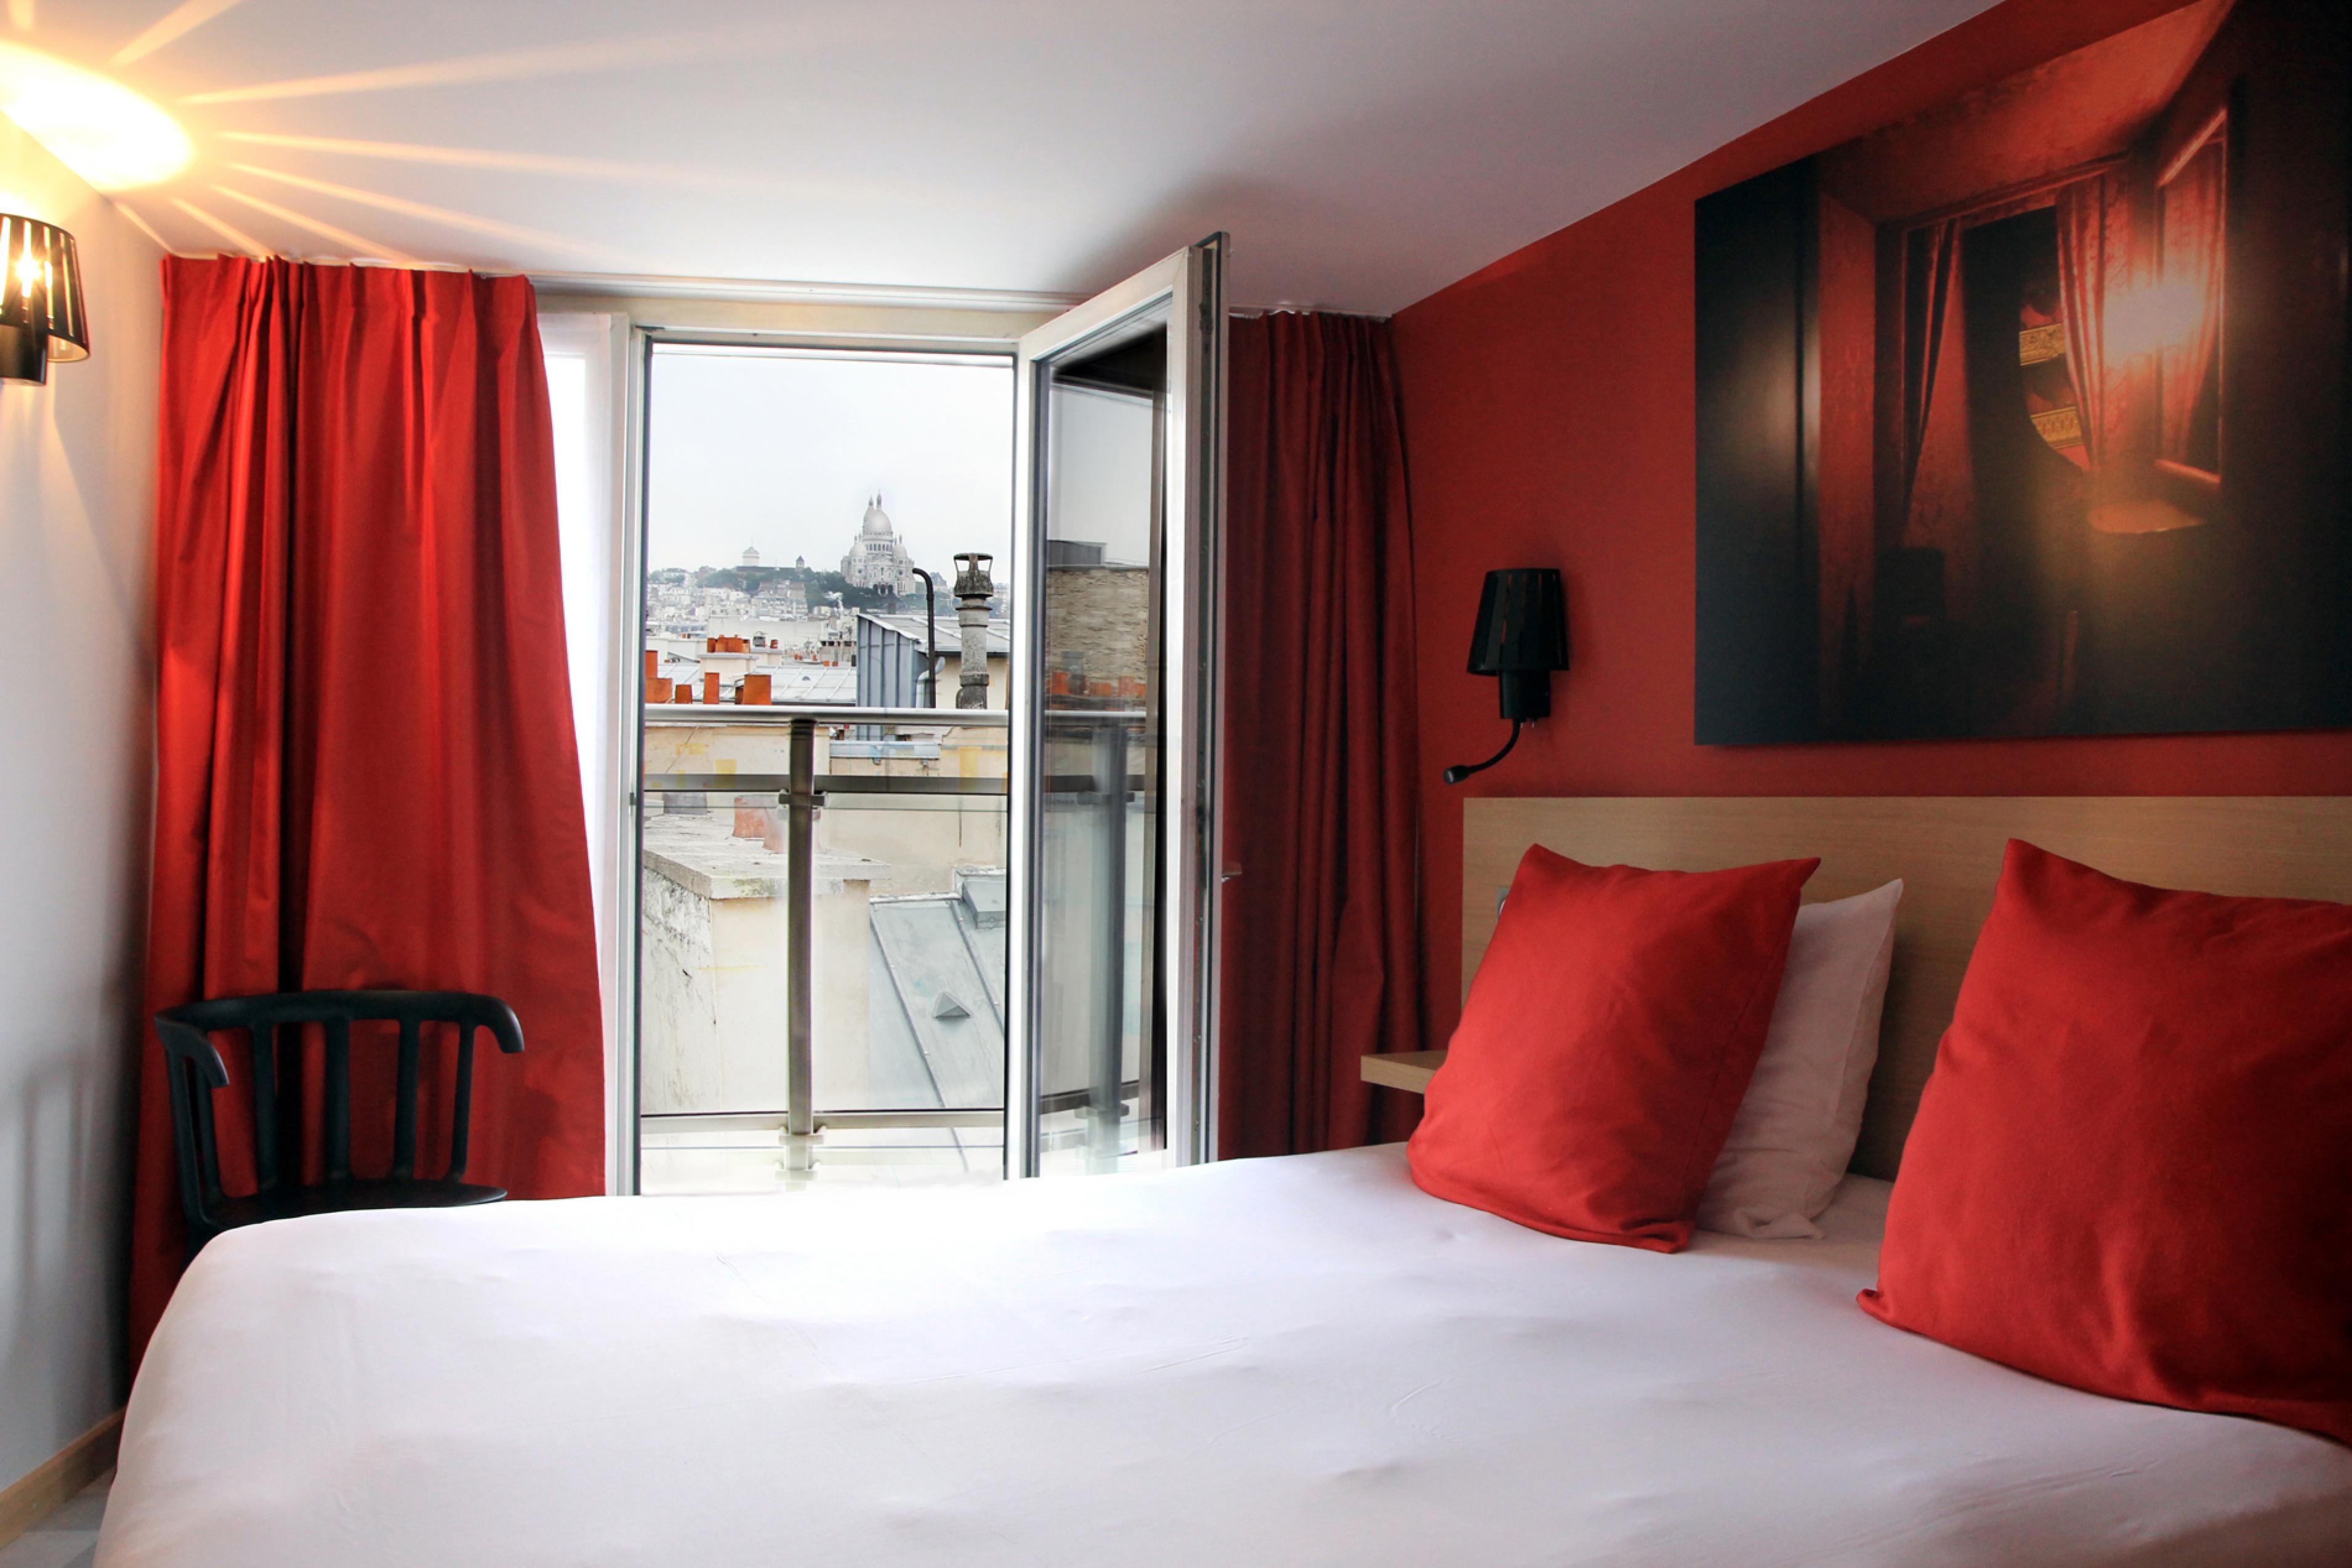 BEST WESTERN Hotel Opéra Drouot - rooms